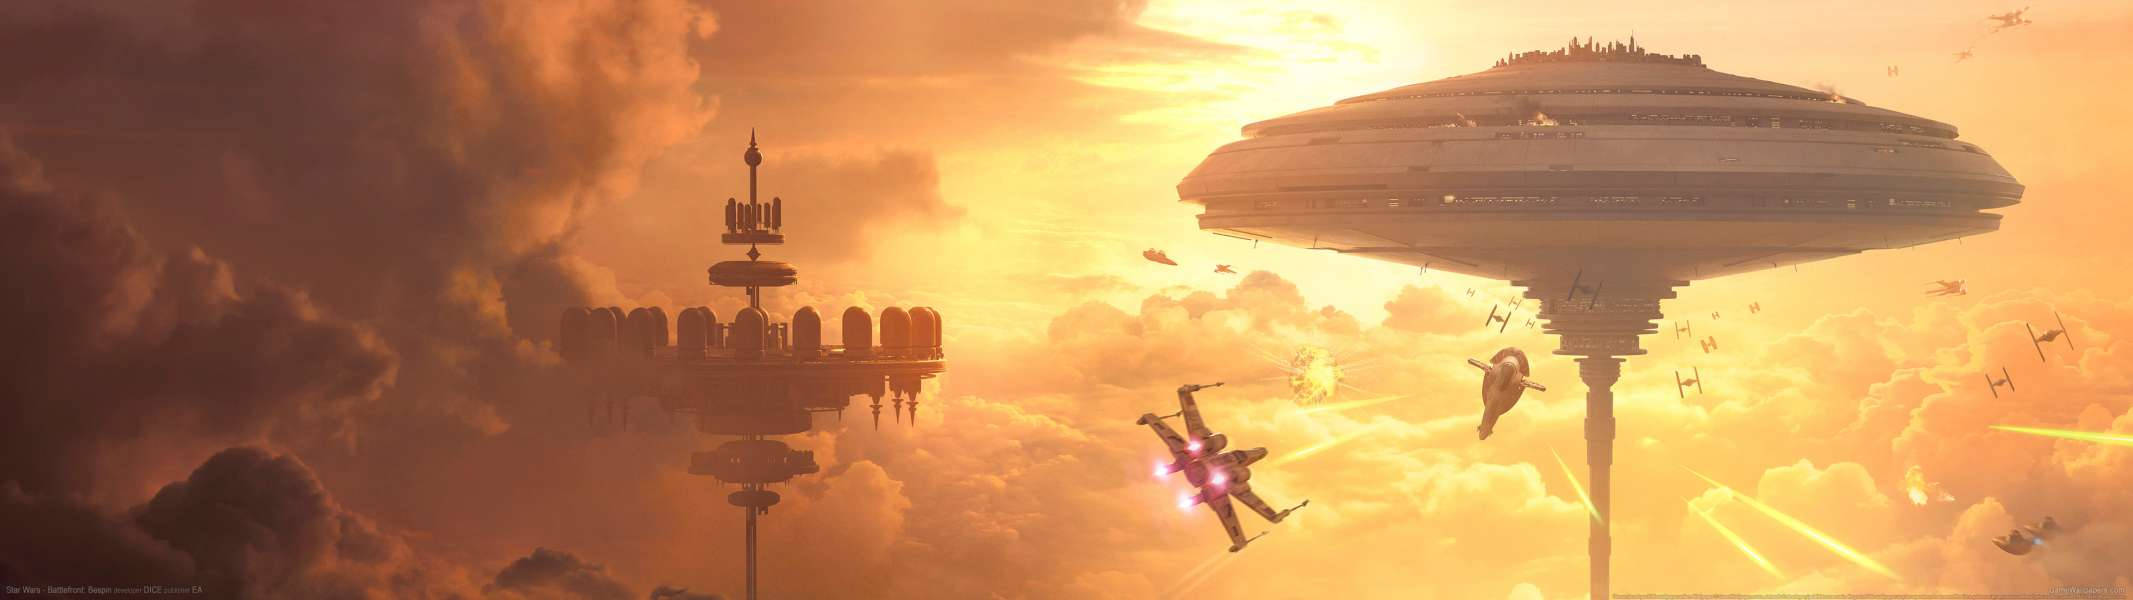 Dual Screen Star Wars Battlefront Bespin